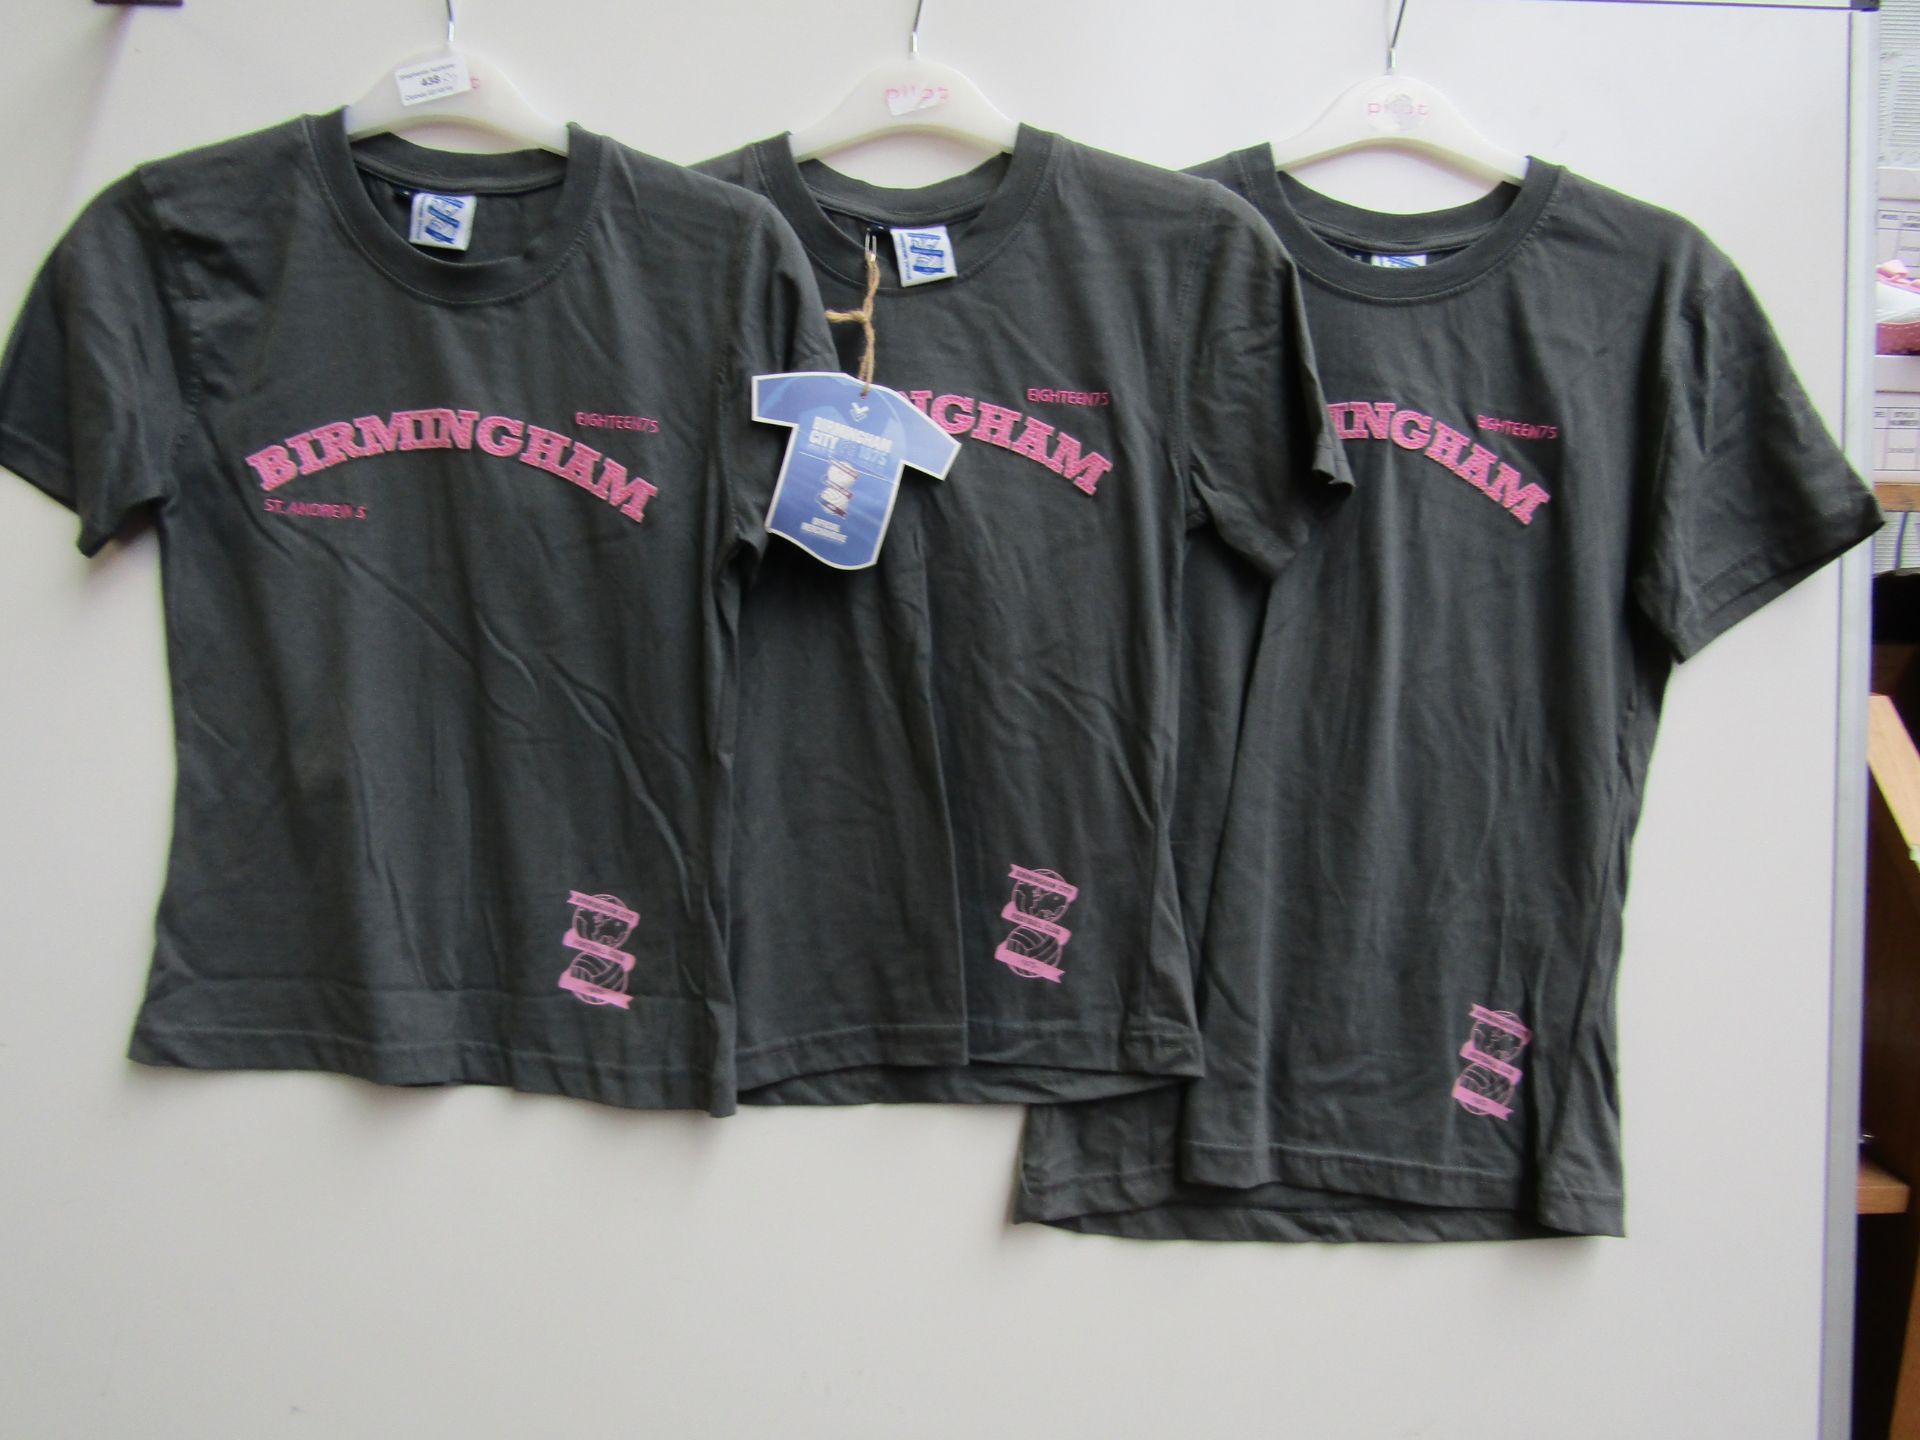 3x Birmingham City T-Shirts, 2x Size 8 and 1x Size 16